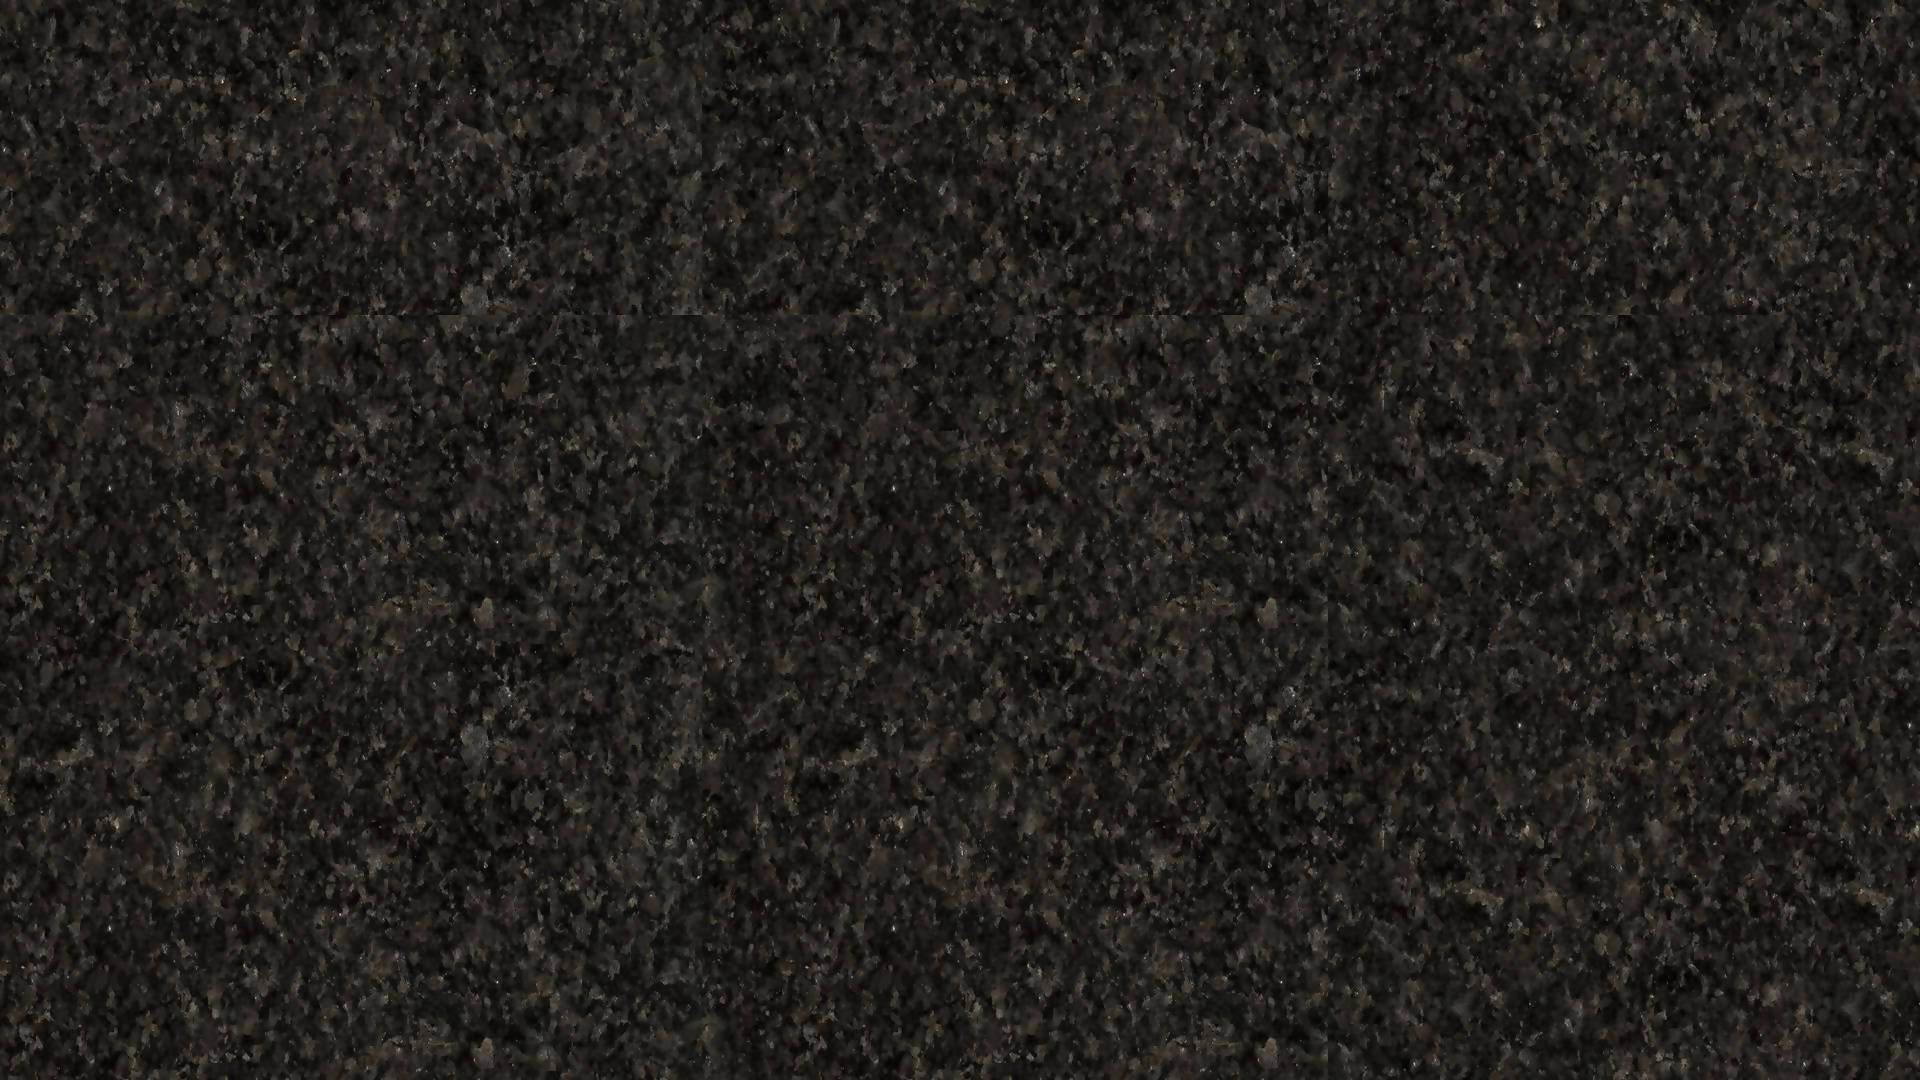 IMPALA GRANITE,Granite,Blyth Marble Ltd,www.work-tops.com